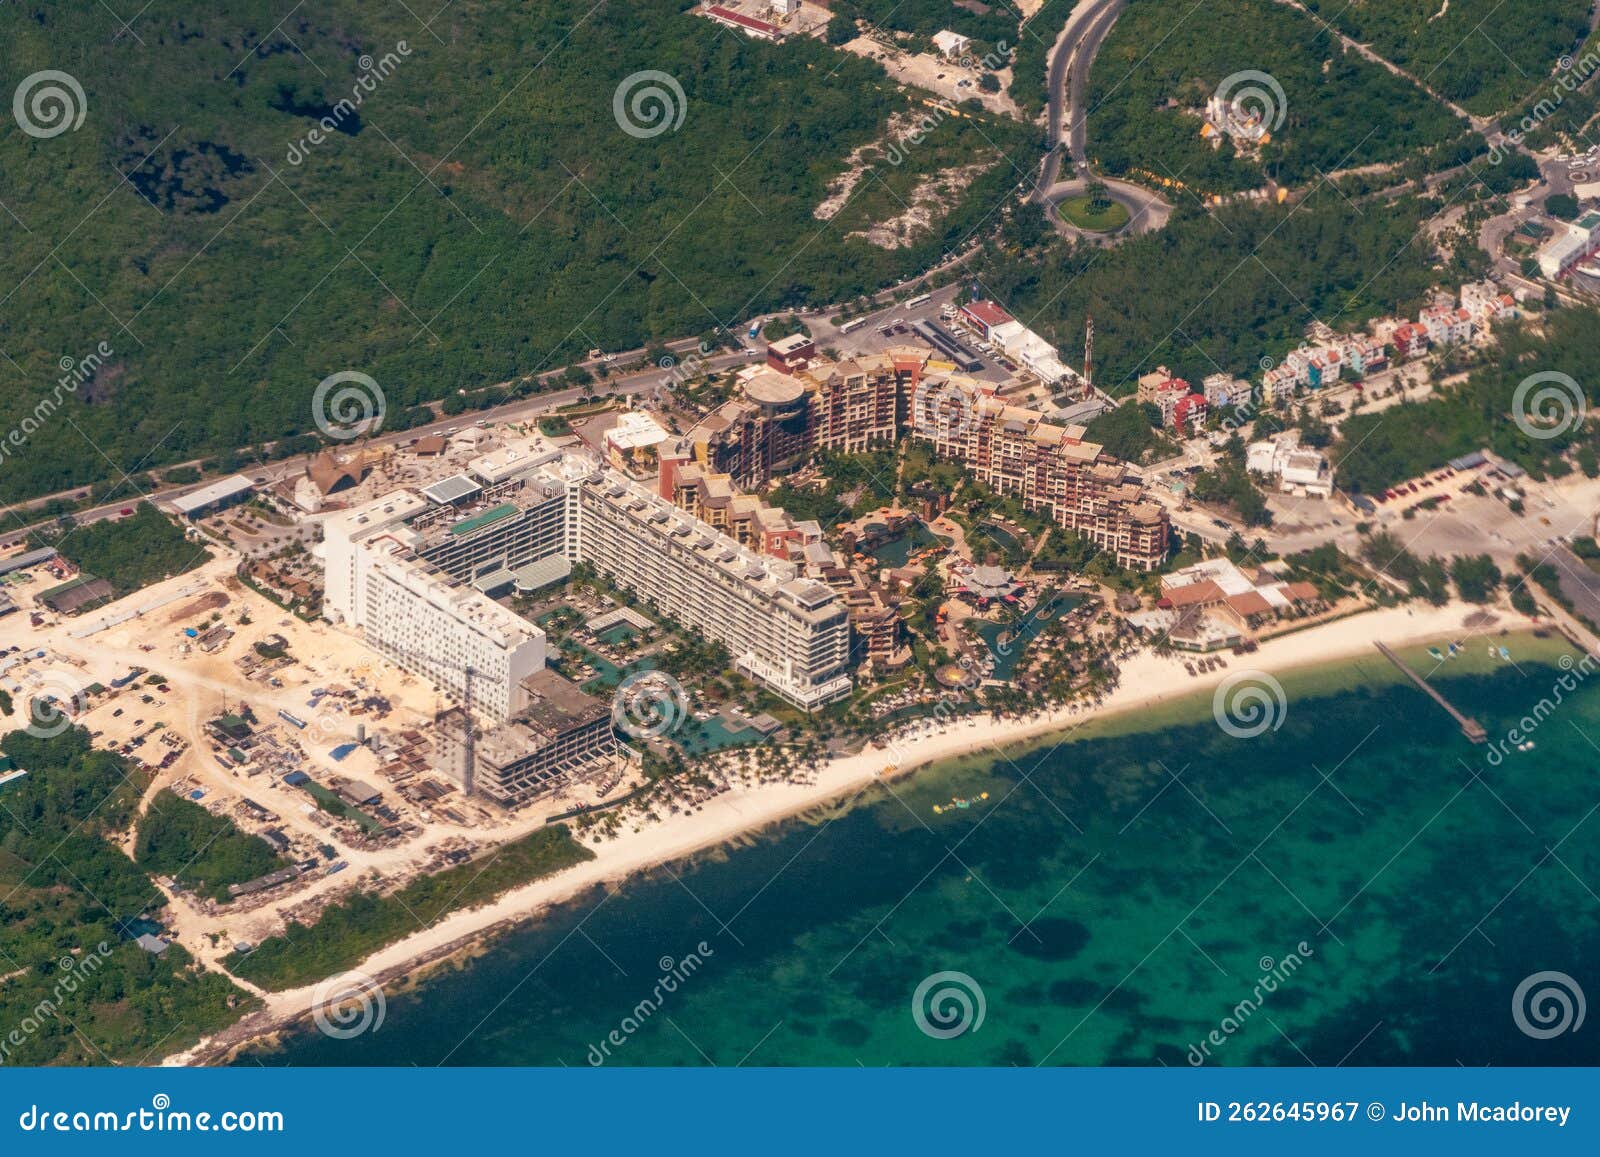 aerial view of the villa del palmar cancun luxury beach resort & spa, the garza blanca cancun, the hotel mousai